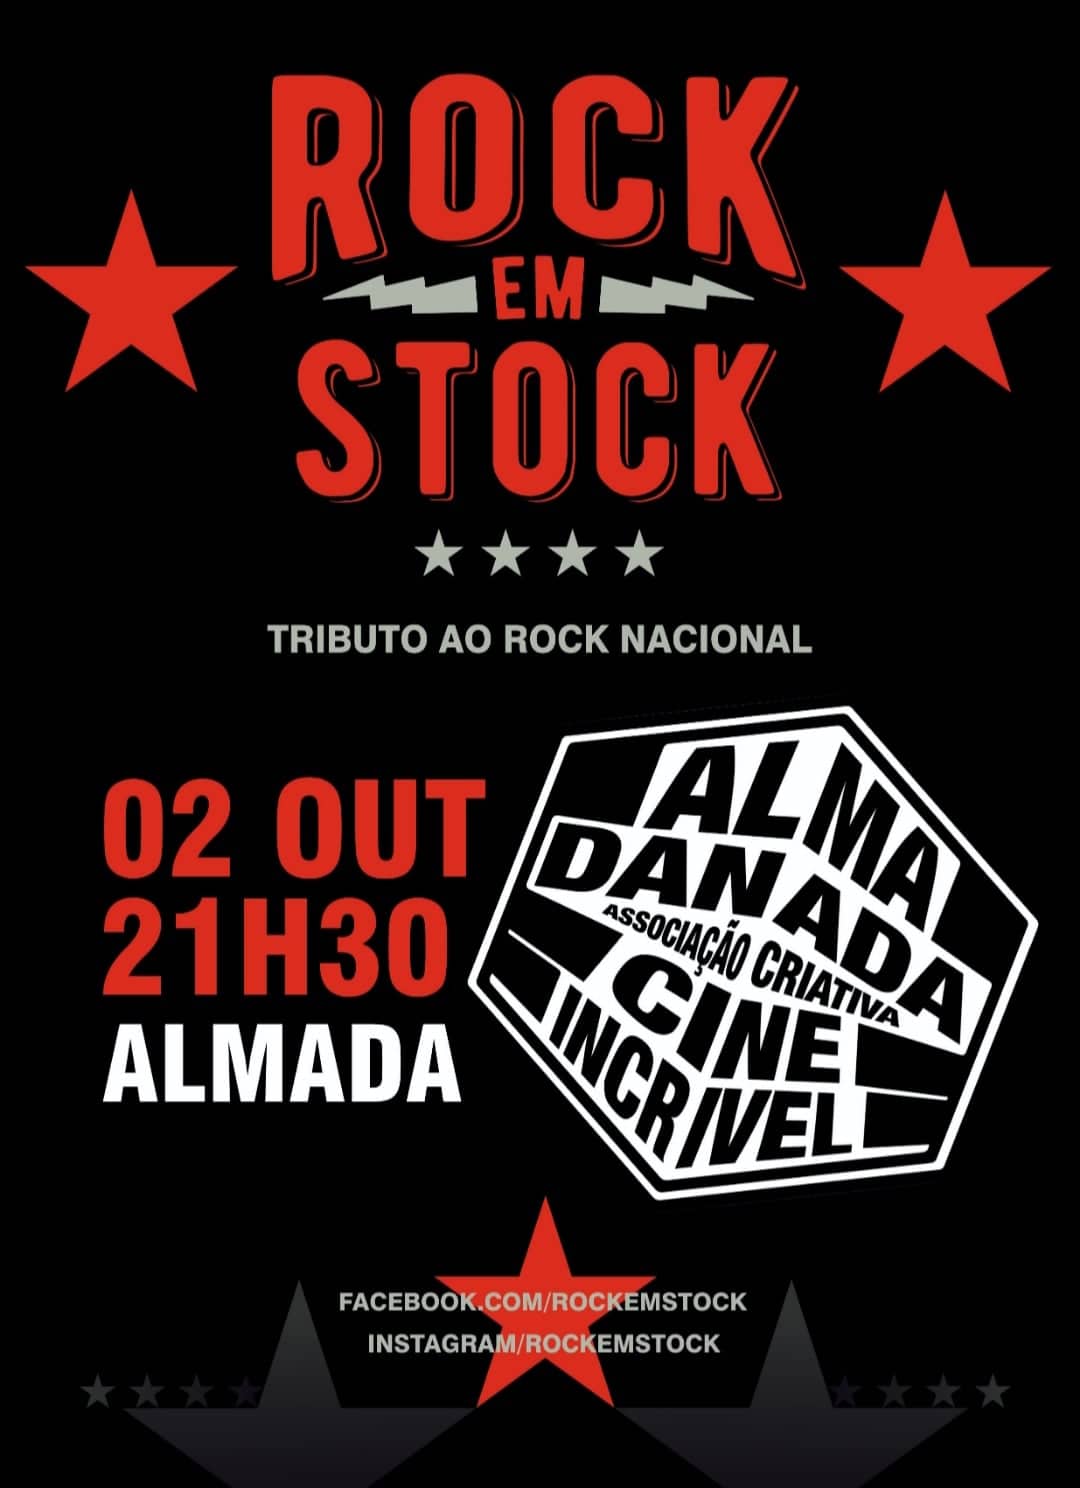 ROCK EM STOCK tributo ao rock nacional